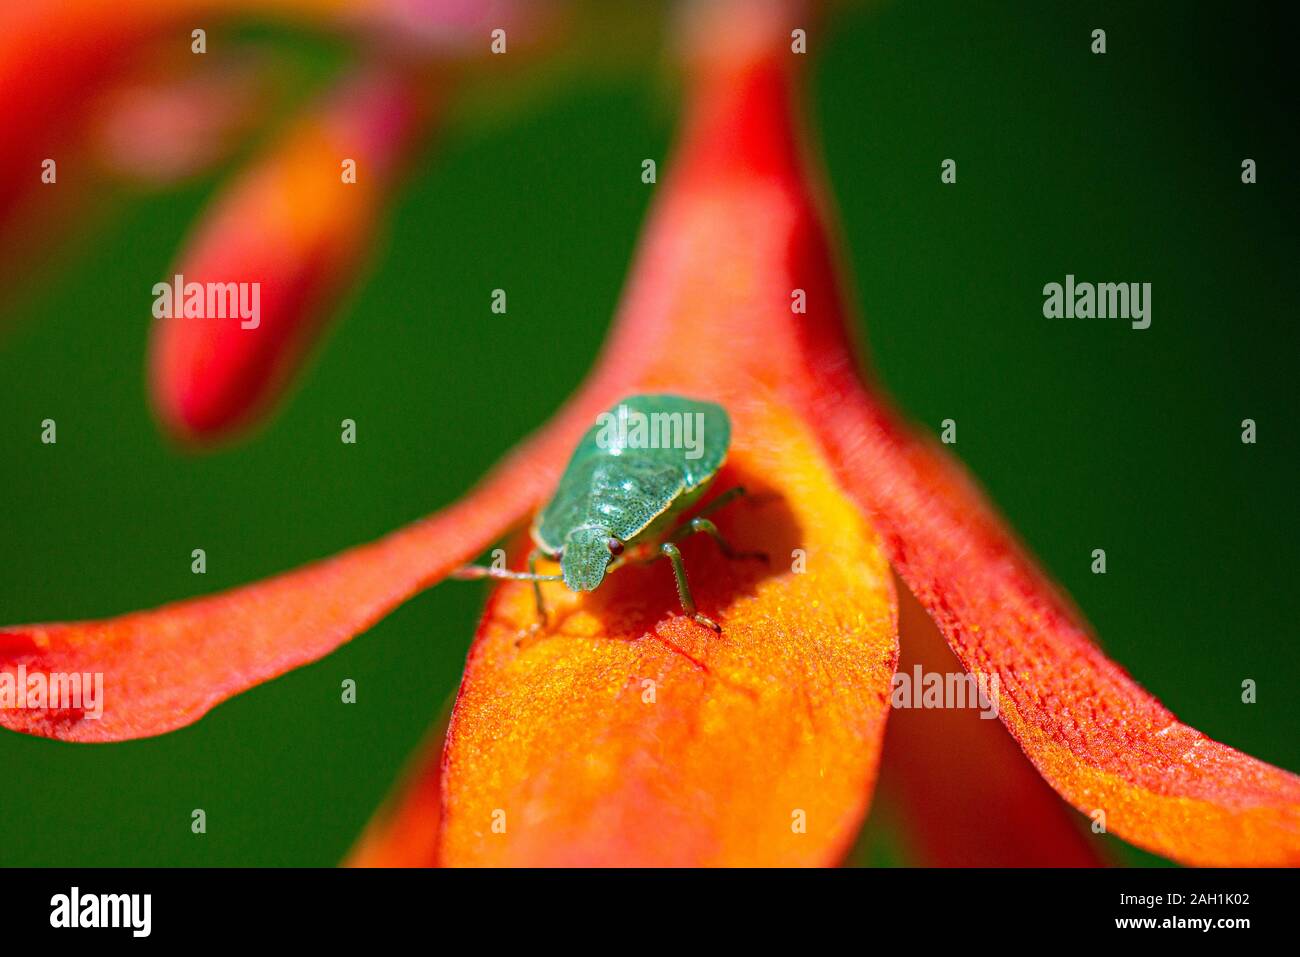 A green shield bug 4th instar nymph (Palomena prasina) on the orange flower of a crocosmia Stock Photo